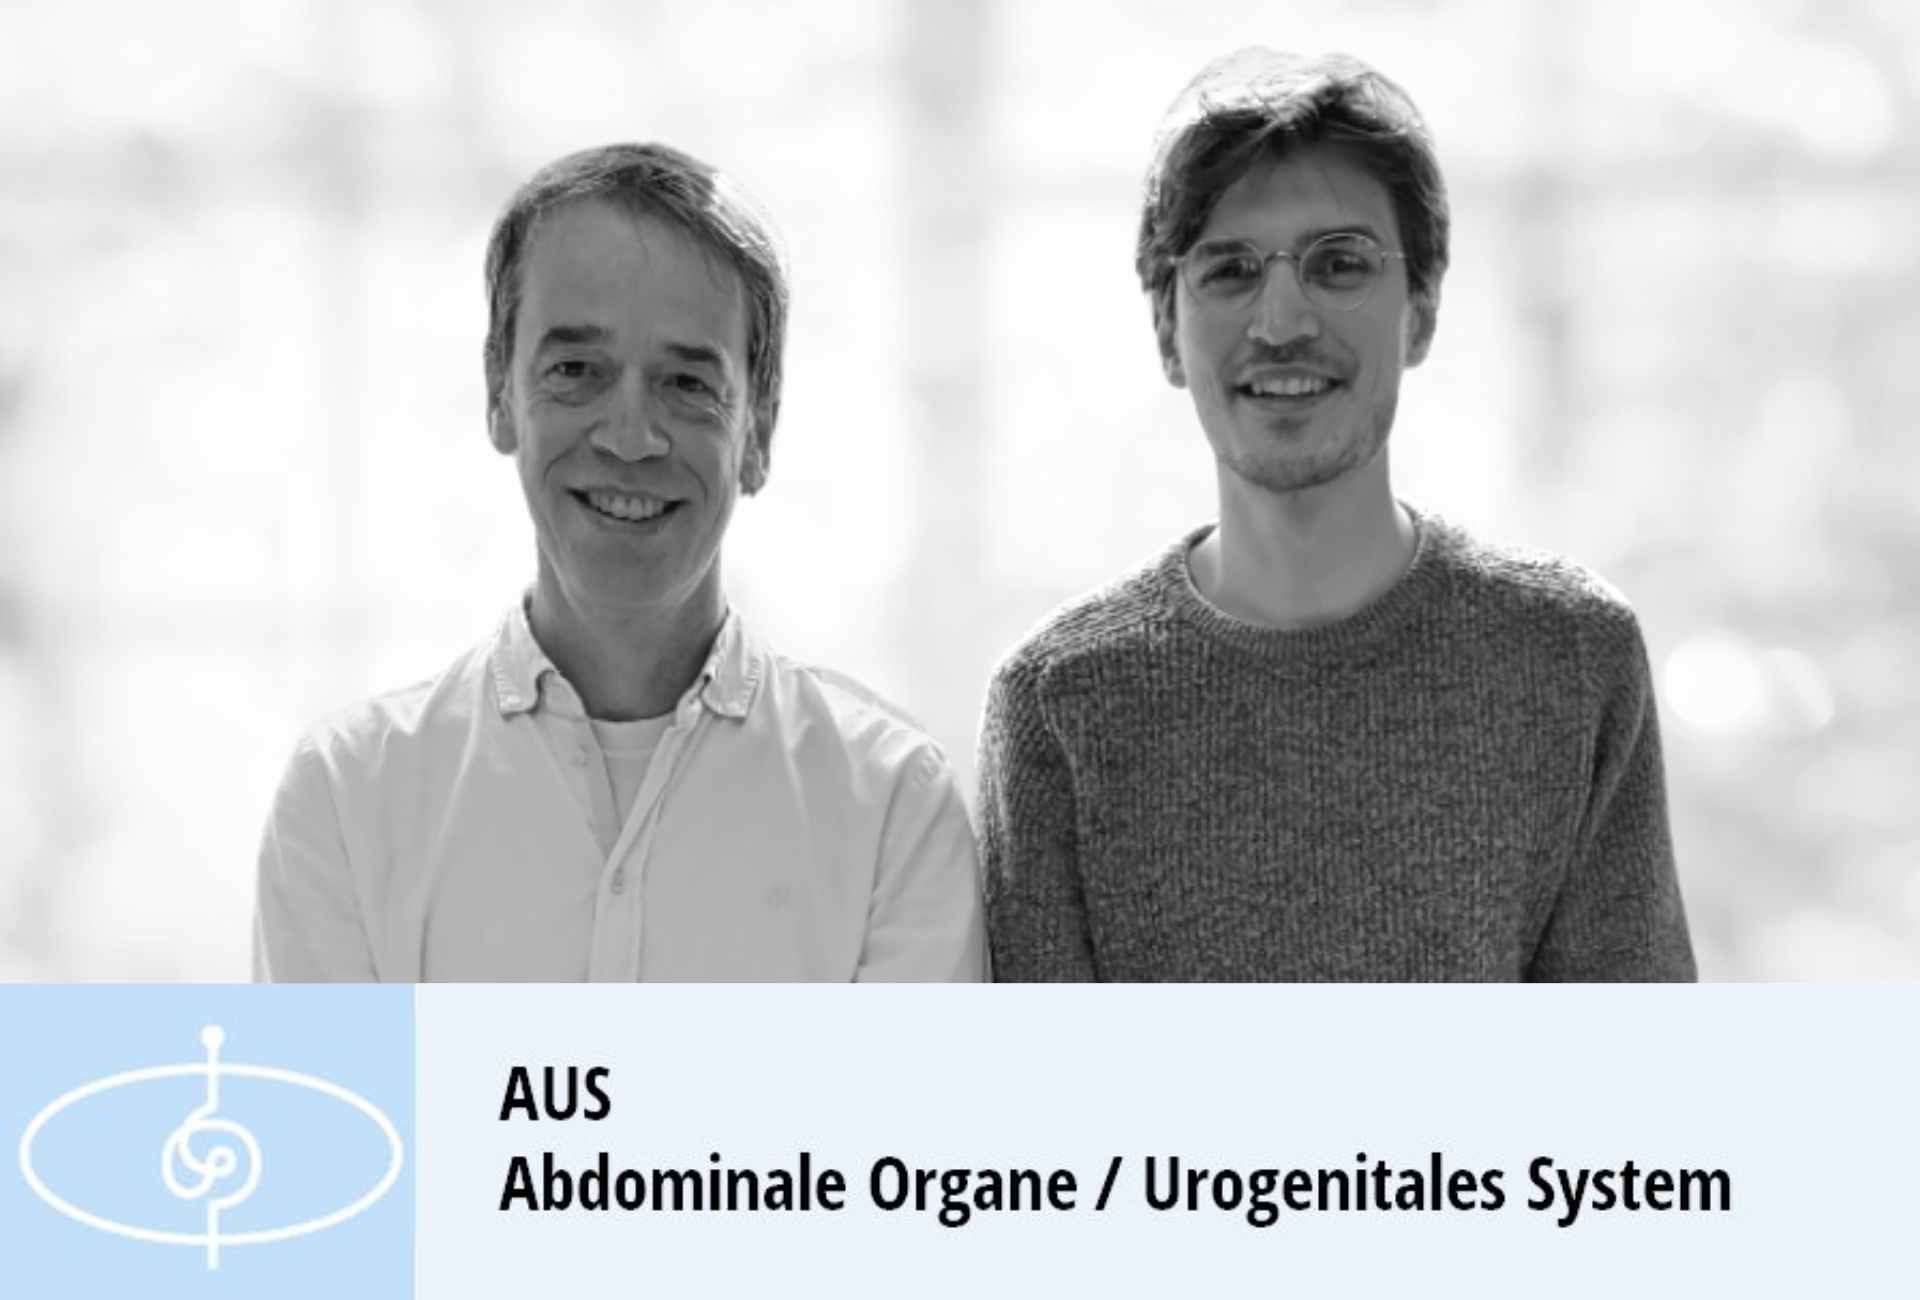 QVO: Abdominale Organe-Urogenitales System (AUS)